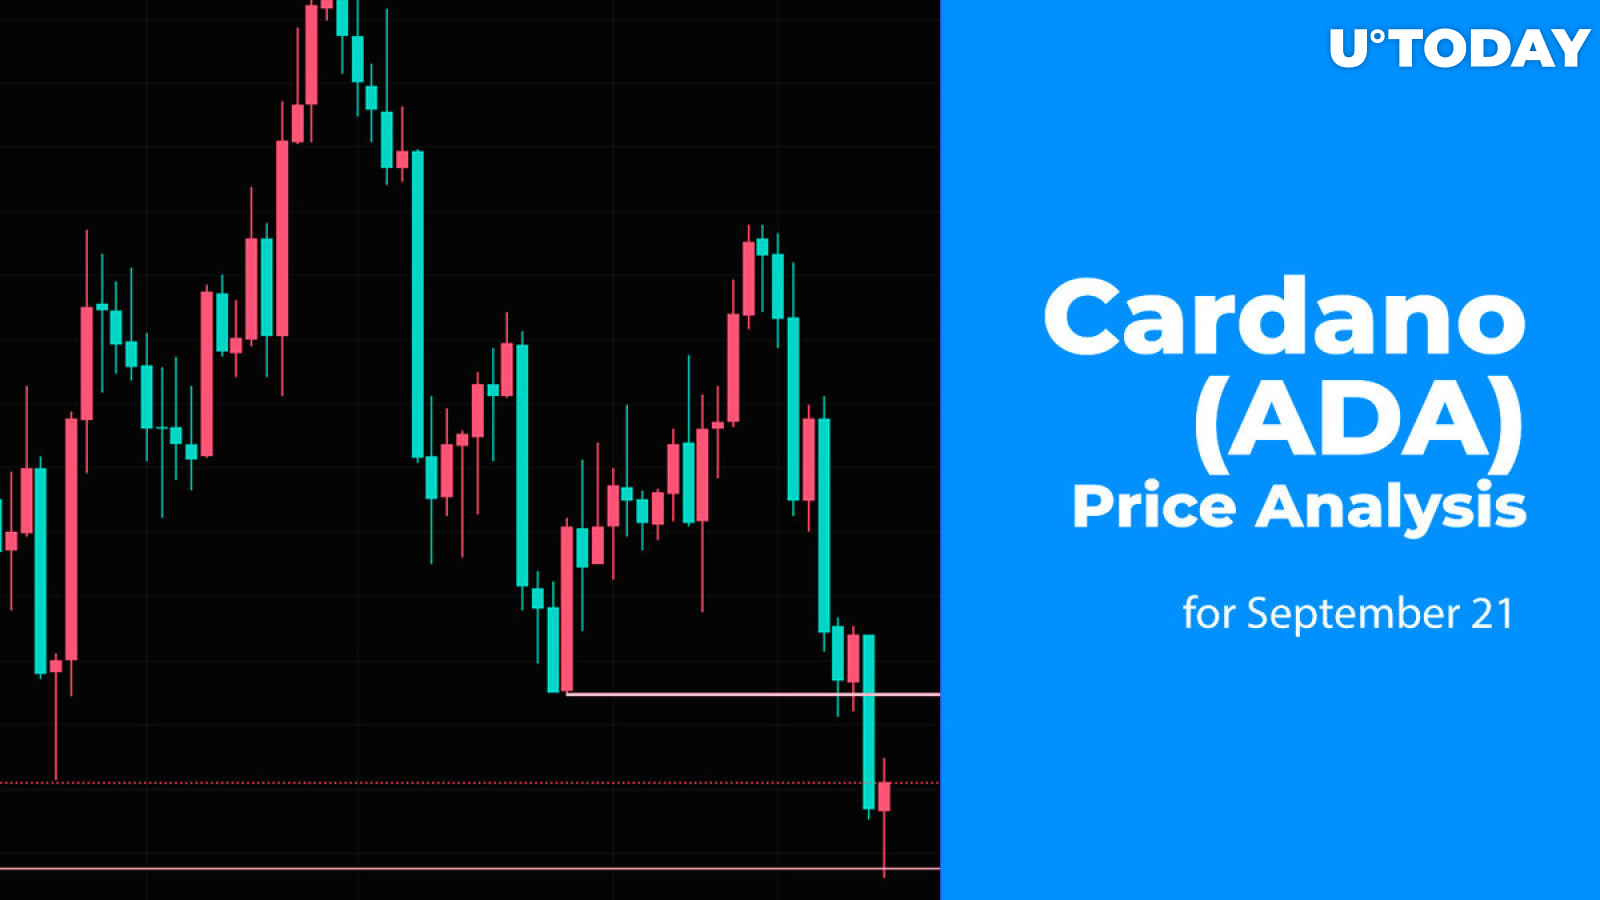 Cardano (ADA) Price Analysis for September 21